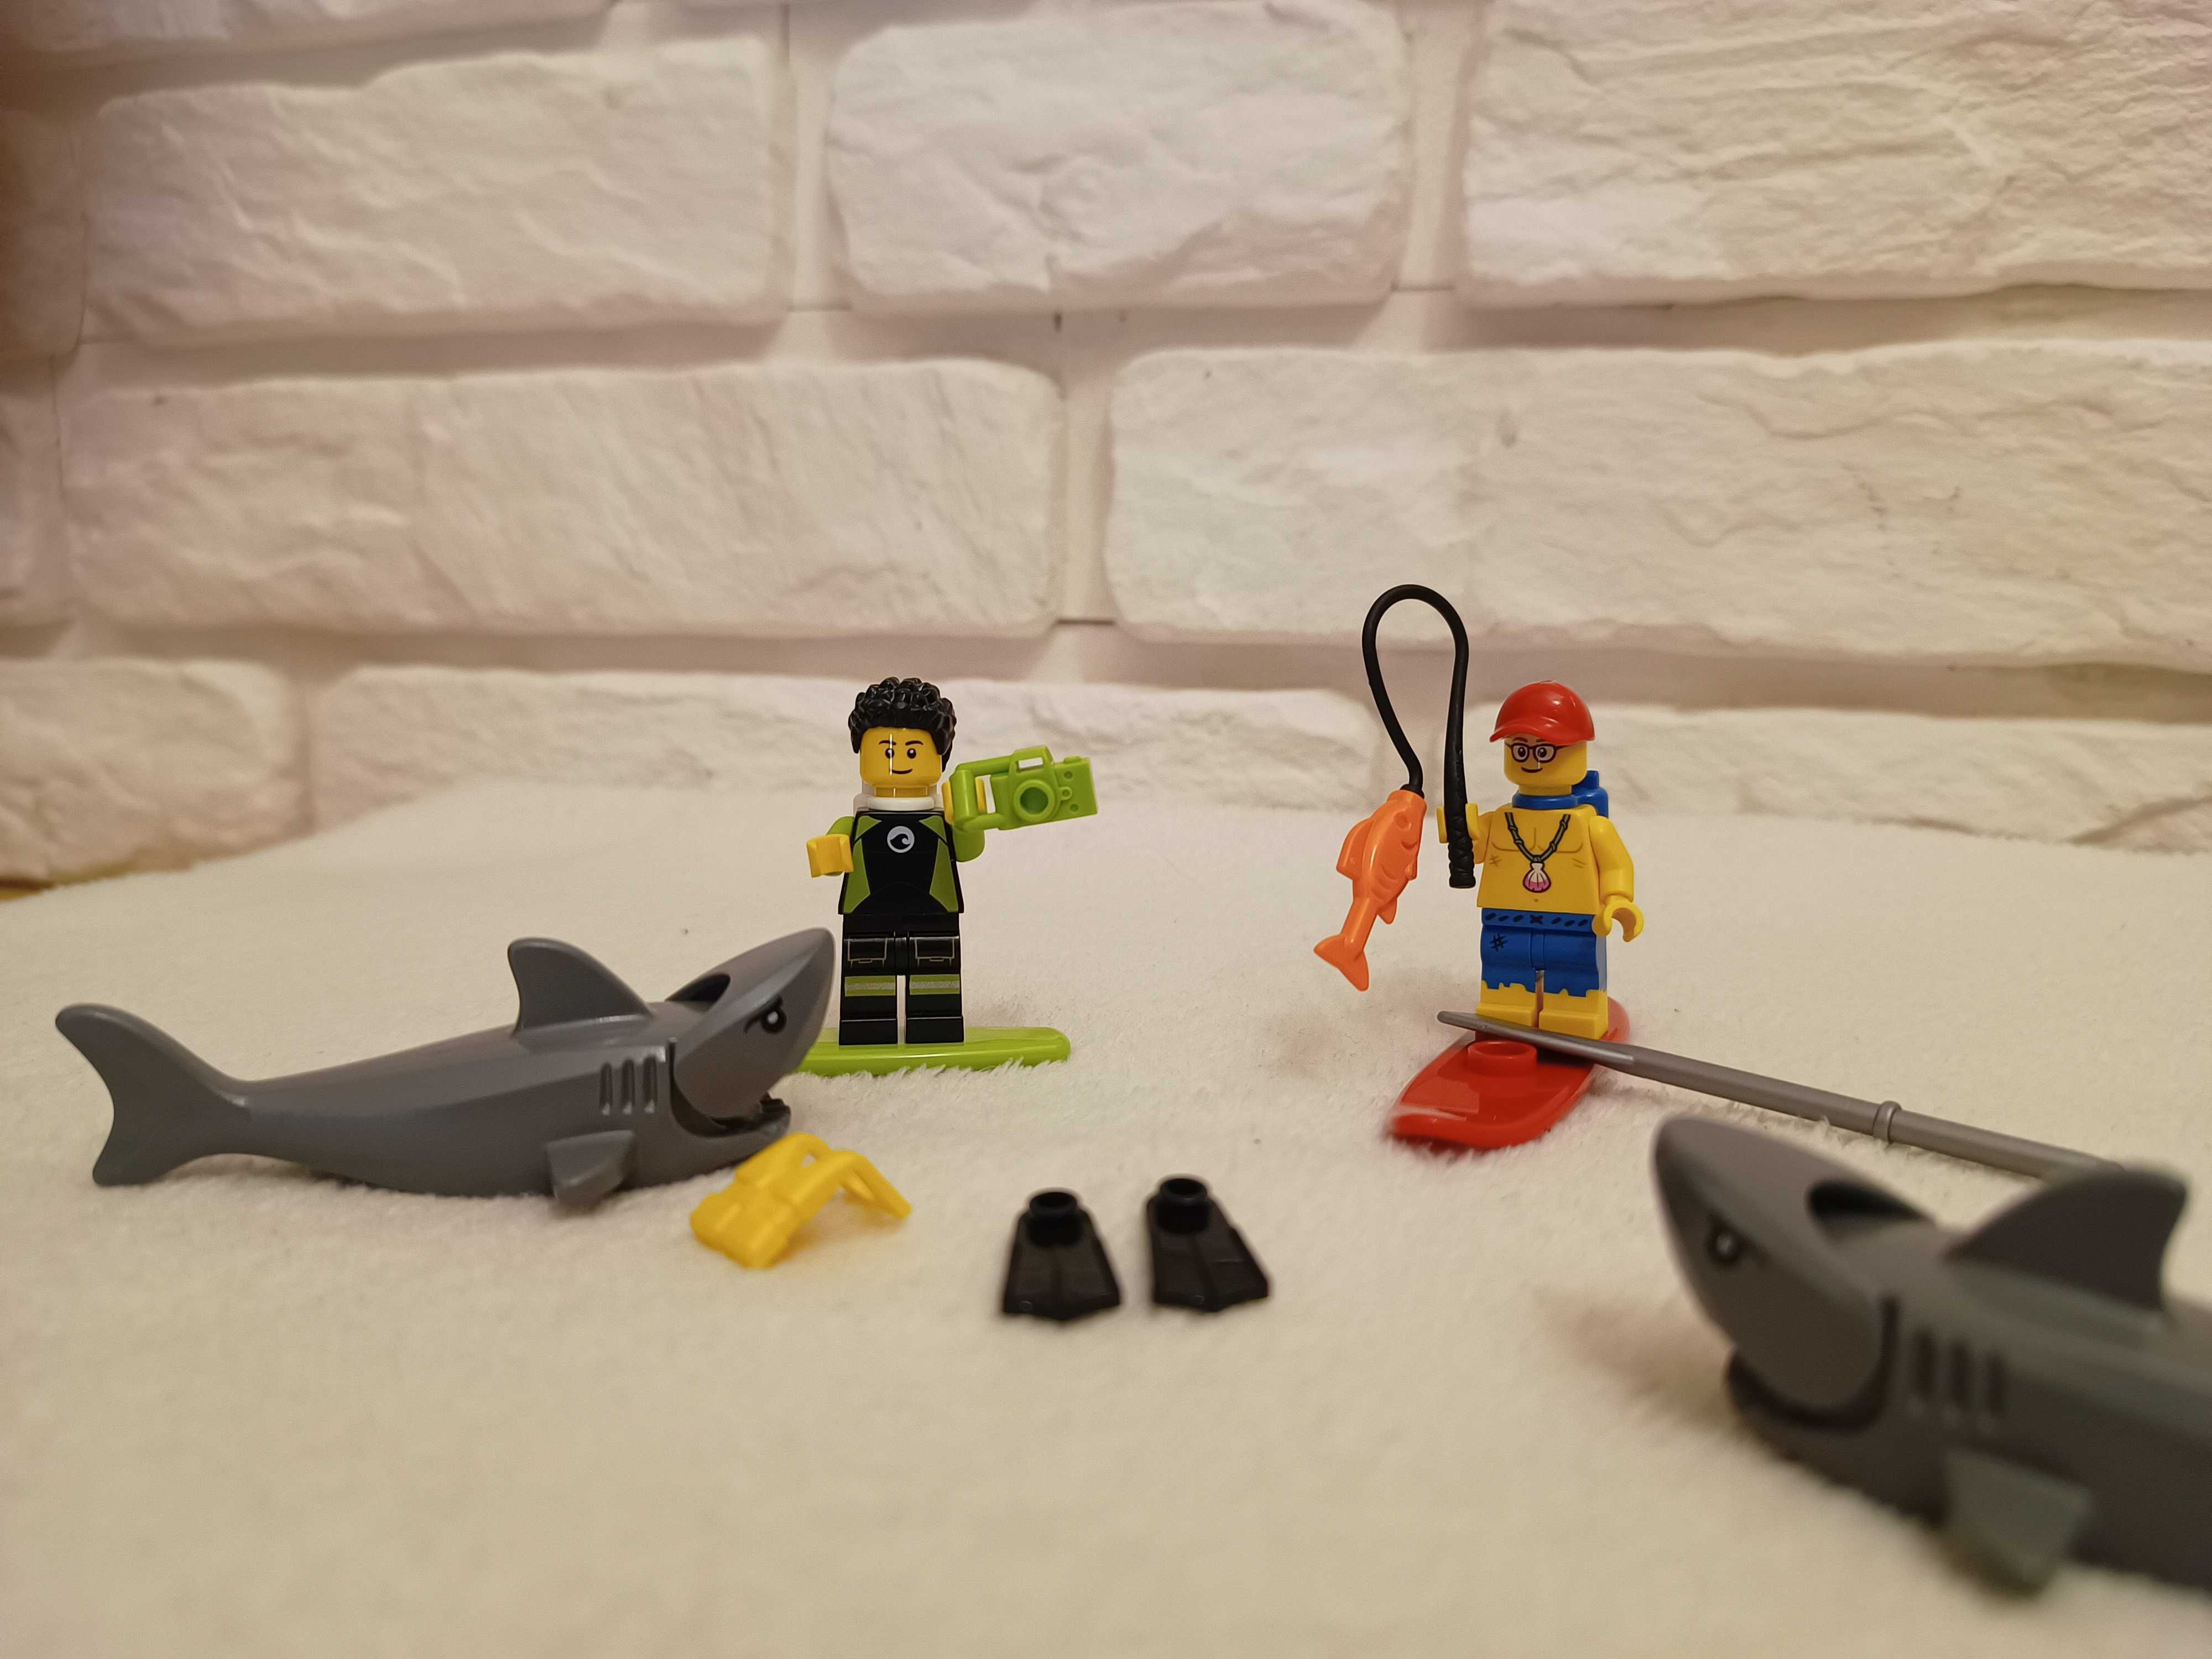 Lego ludziki + dodatki - wodne